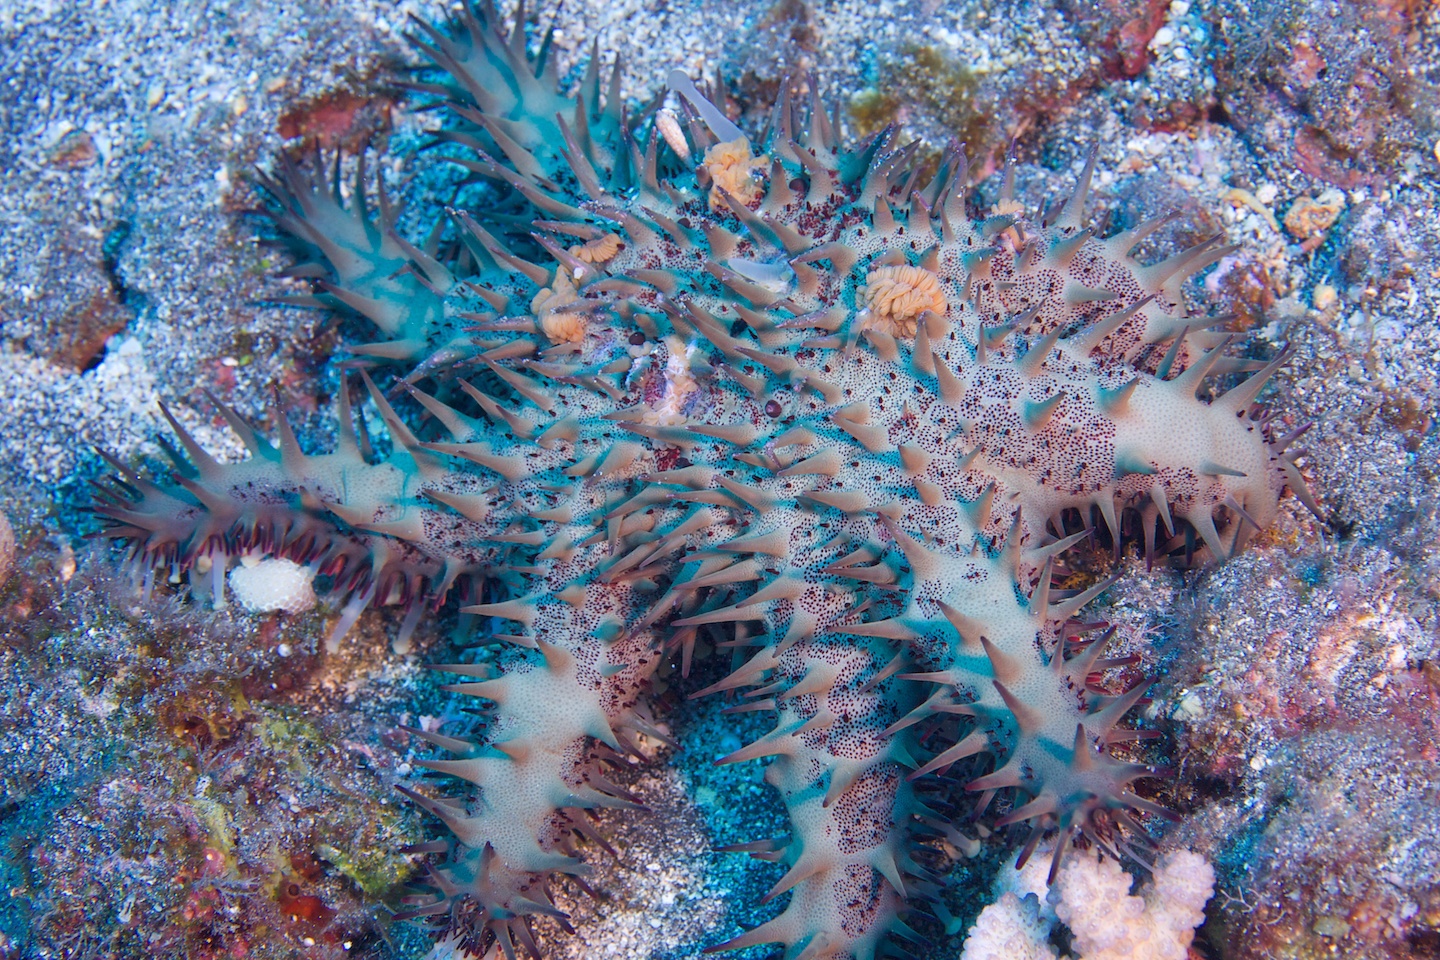 Crown-of-thorns sea star